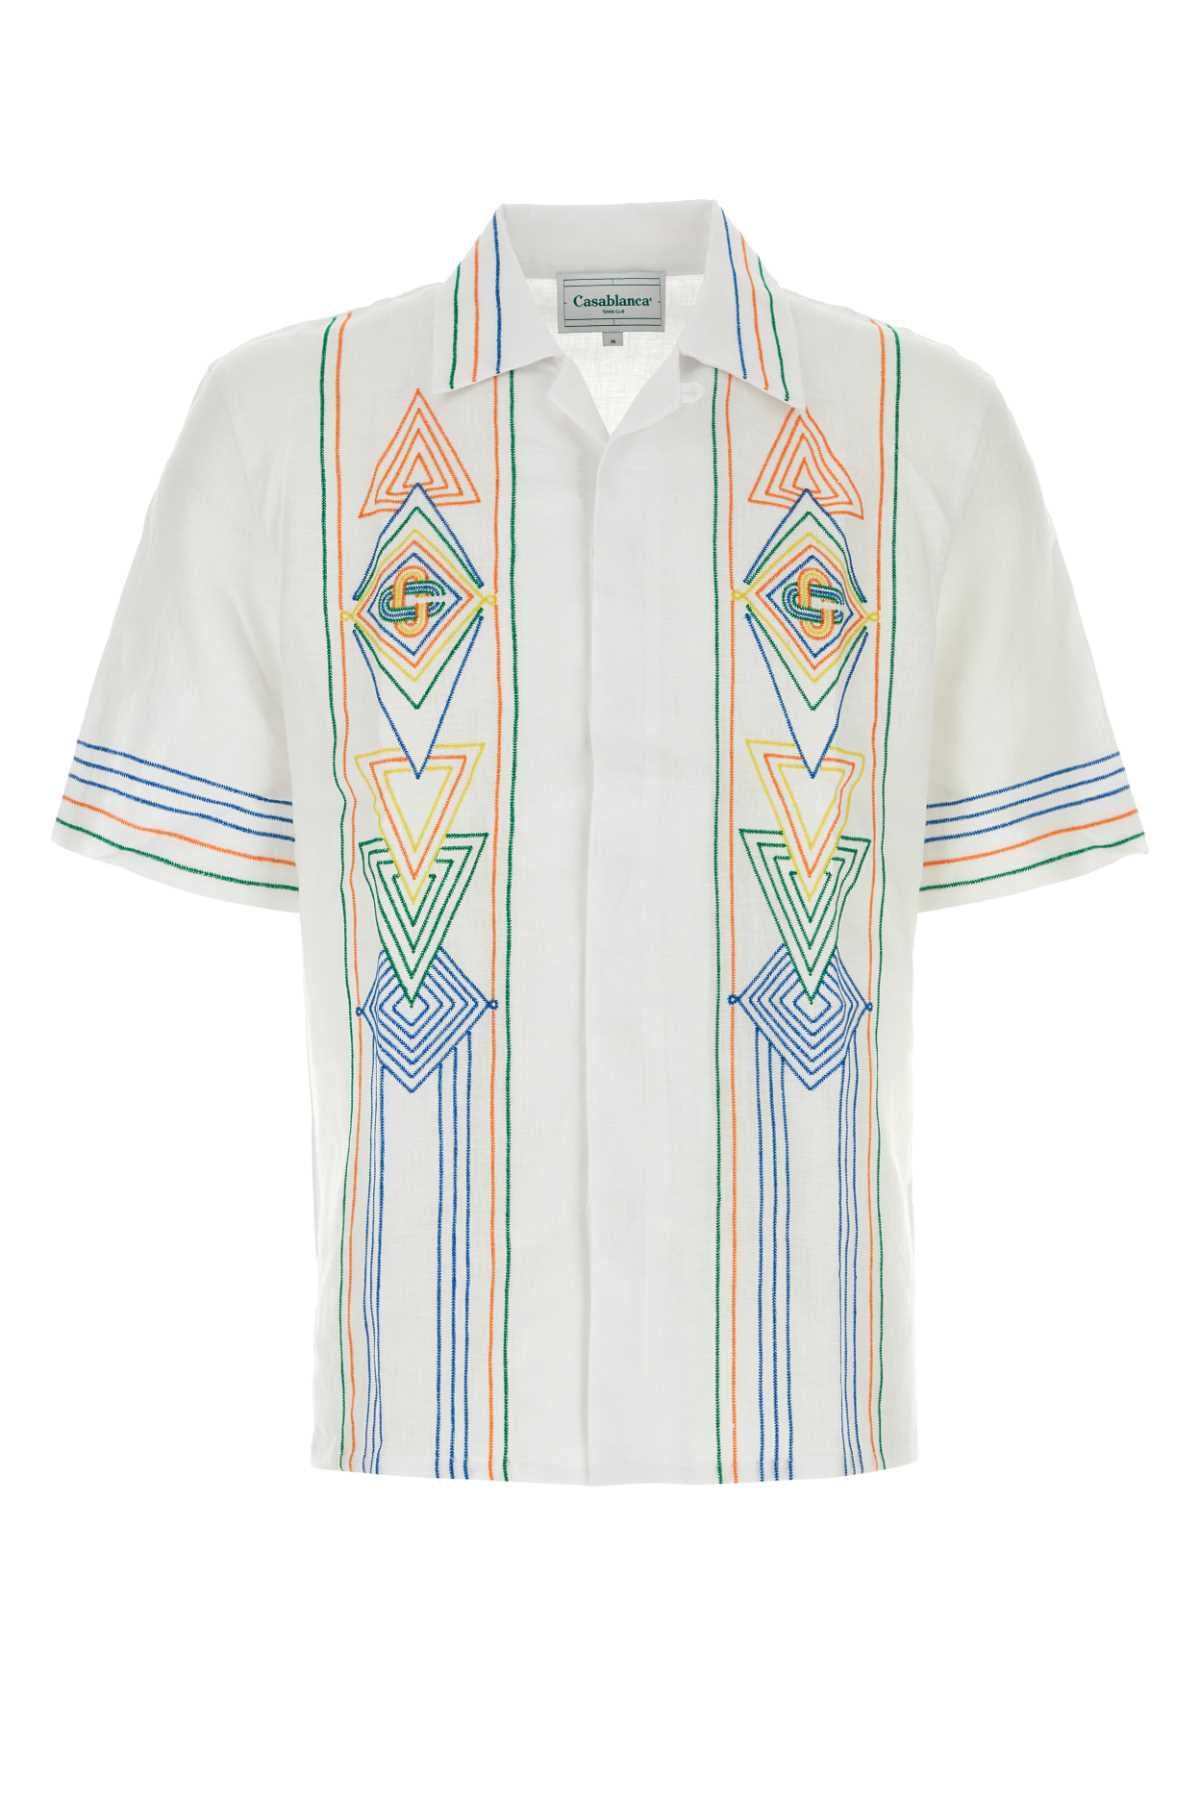 Casablanca White Linen Shirt